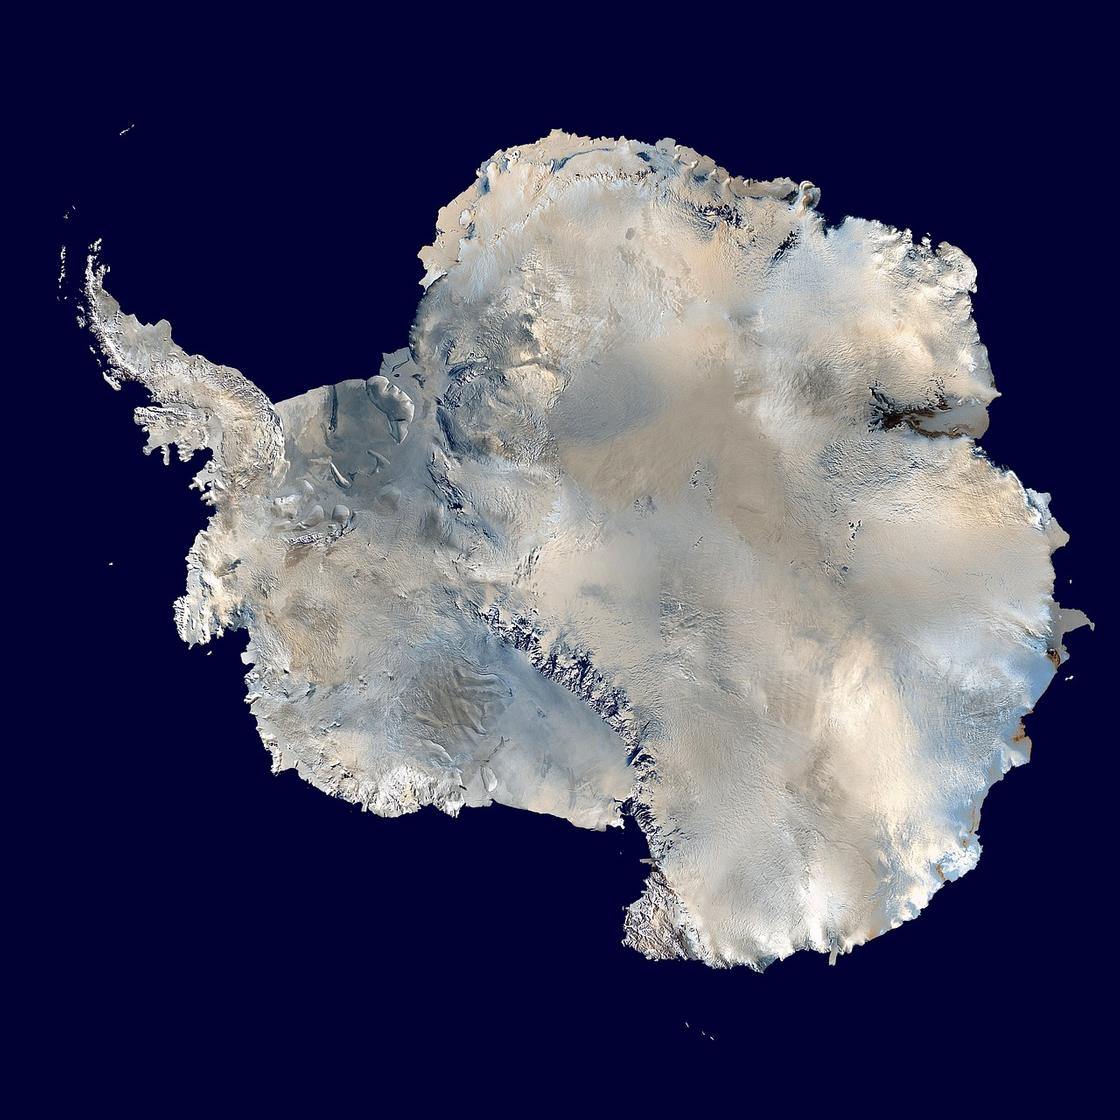 Континент Антарктида, покрытый льдом